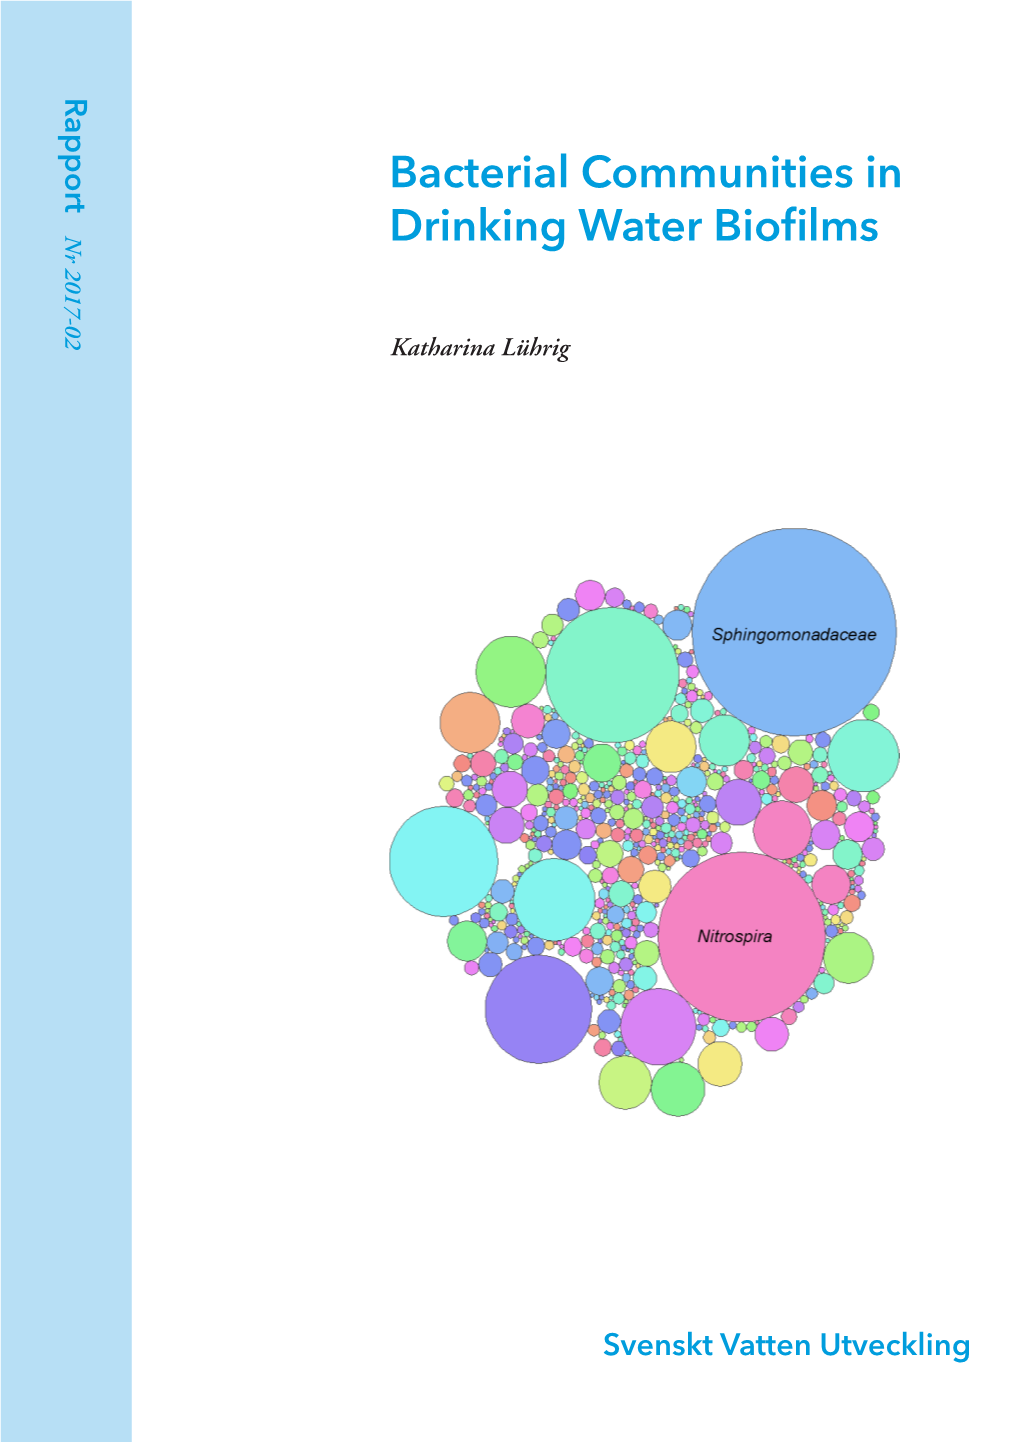 Bacterial Communities in Drinking Water Biofilms